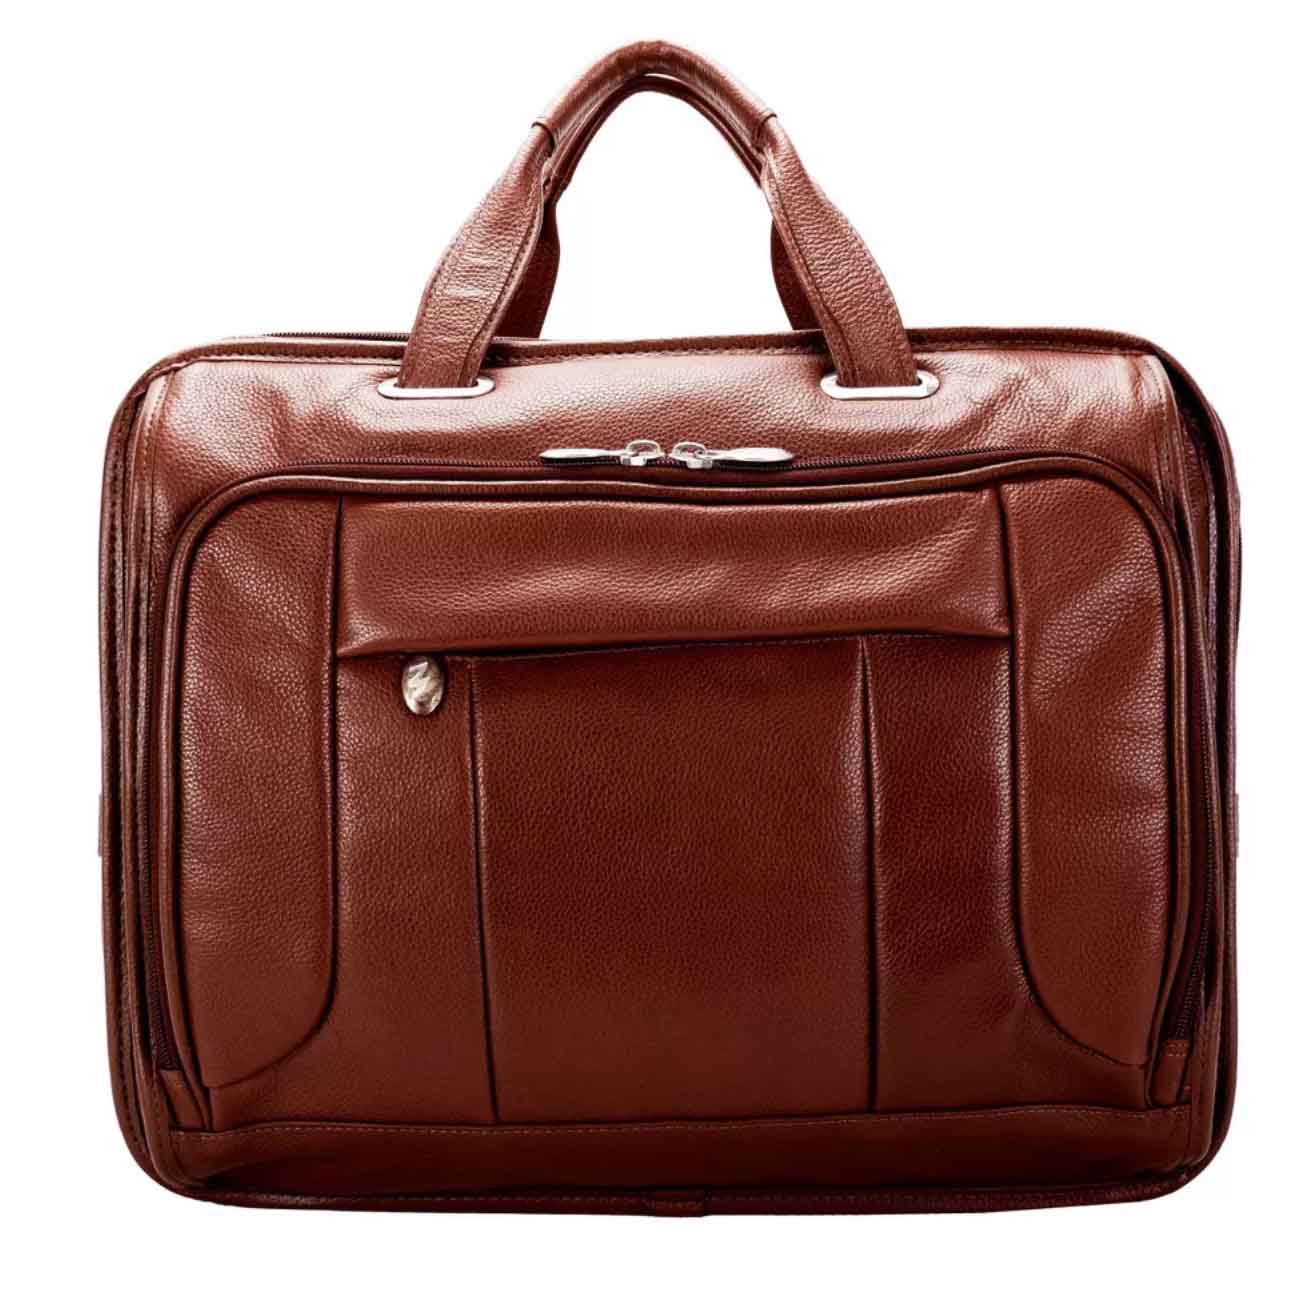 Brown leather laptop bag